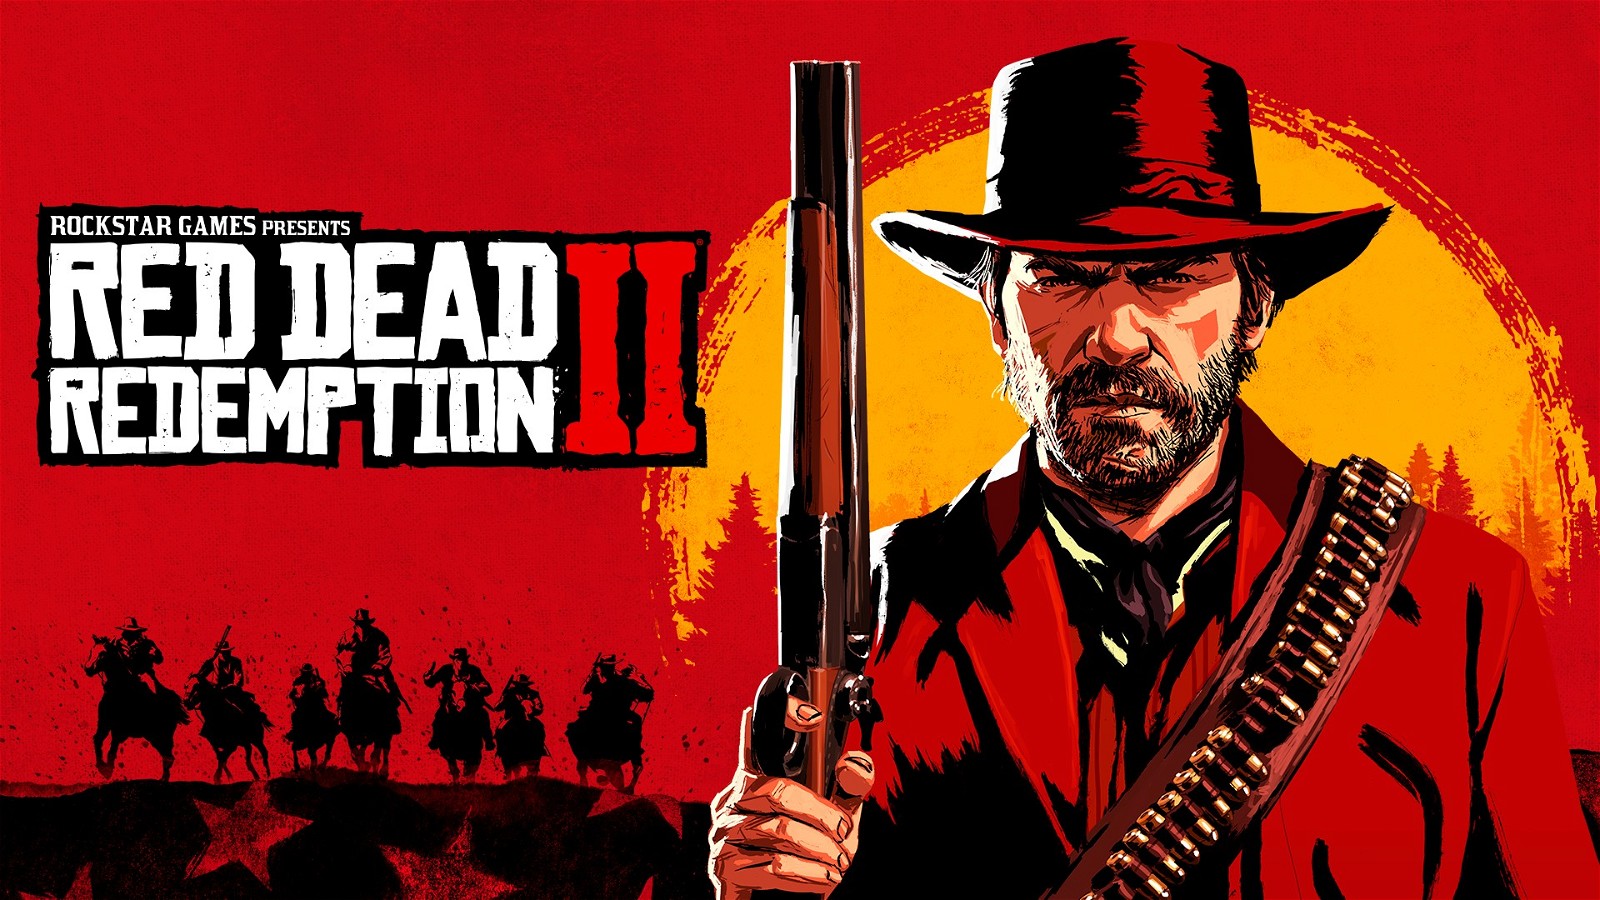 Official artwork of Rockstar Games' Red Dead Redemption 2